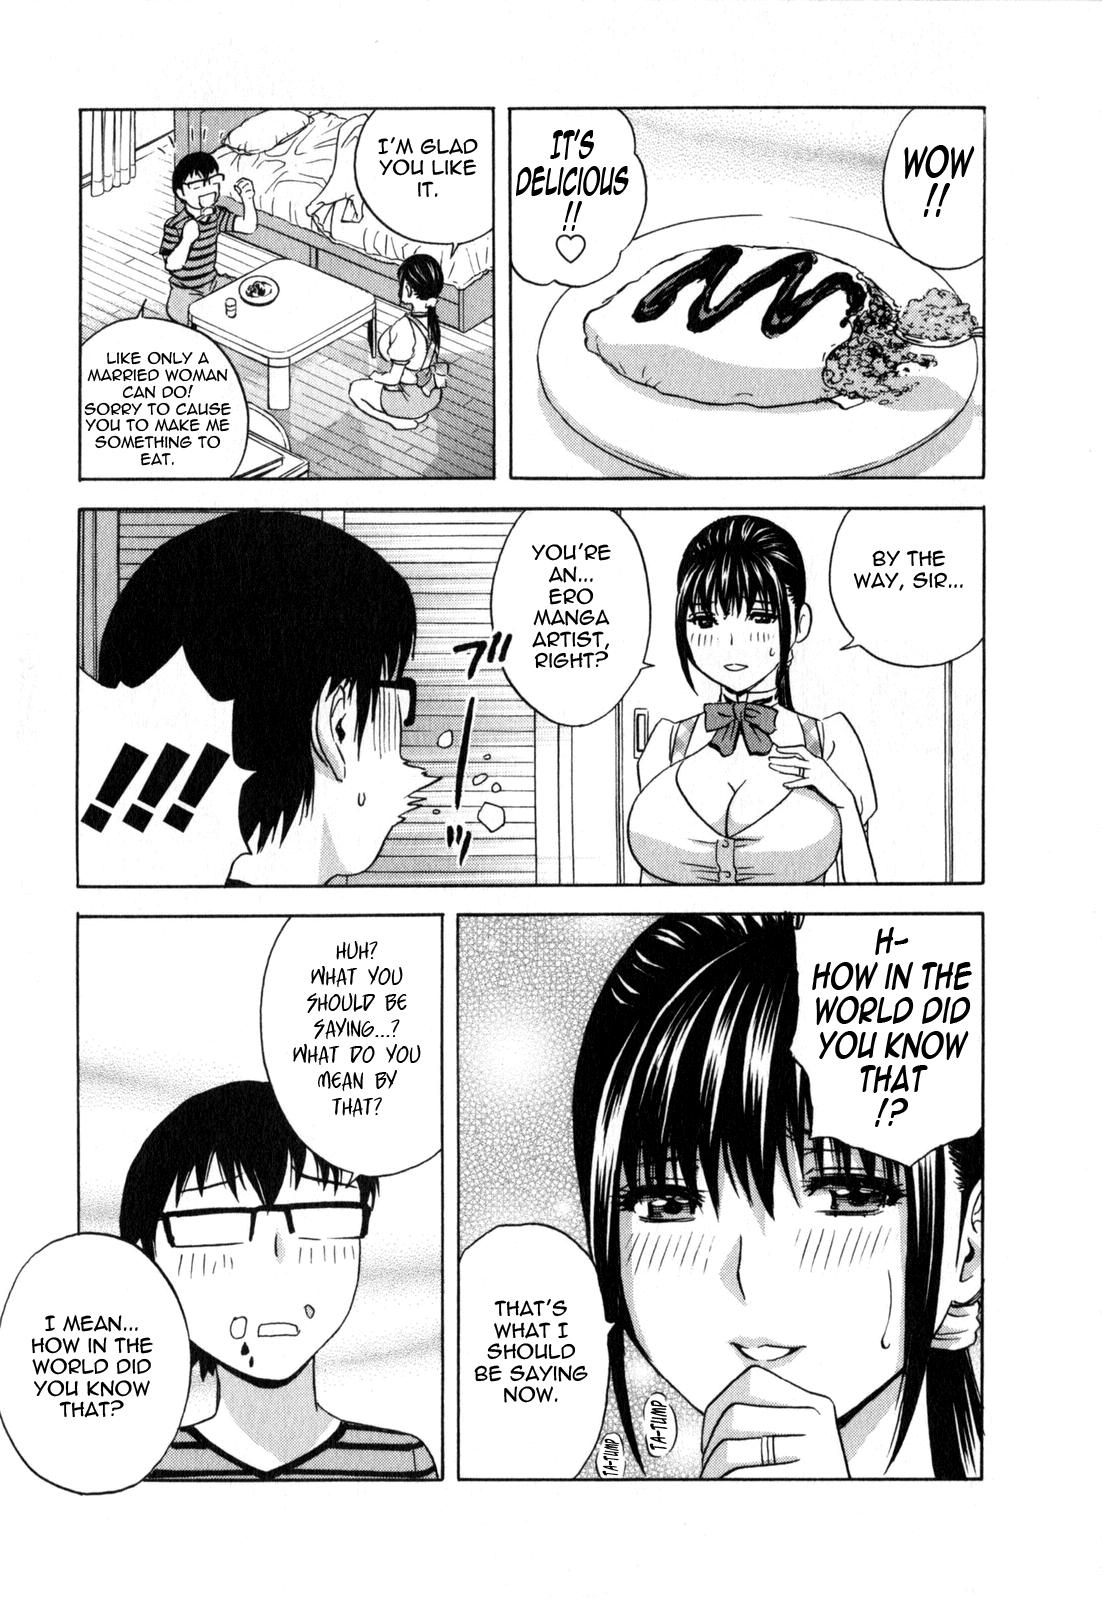 [Hidemaru] Life with Married Women Just Like a Manga 2 - Ch. 1-8 [English] {Tadanohito} 113